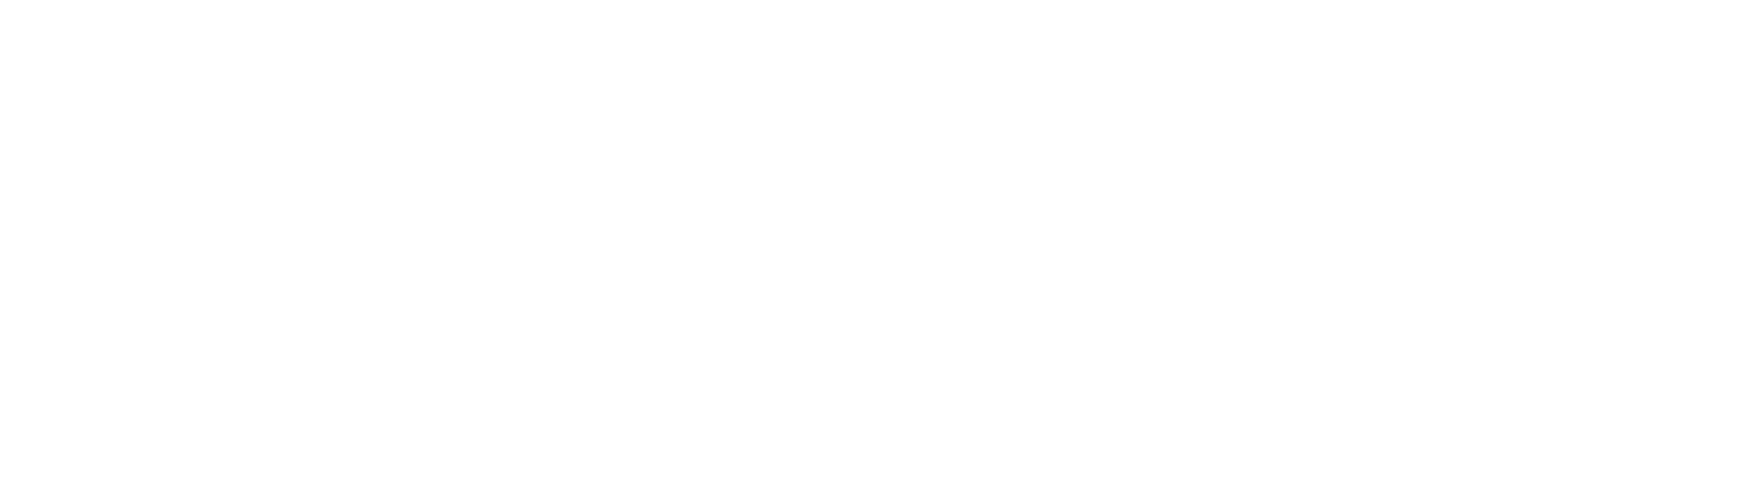 WINGSPAN_OE_Logo_DigitalEdition.png